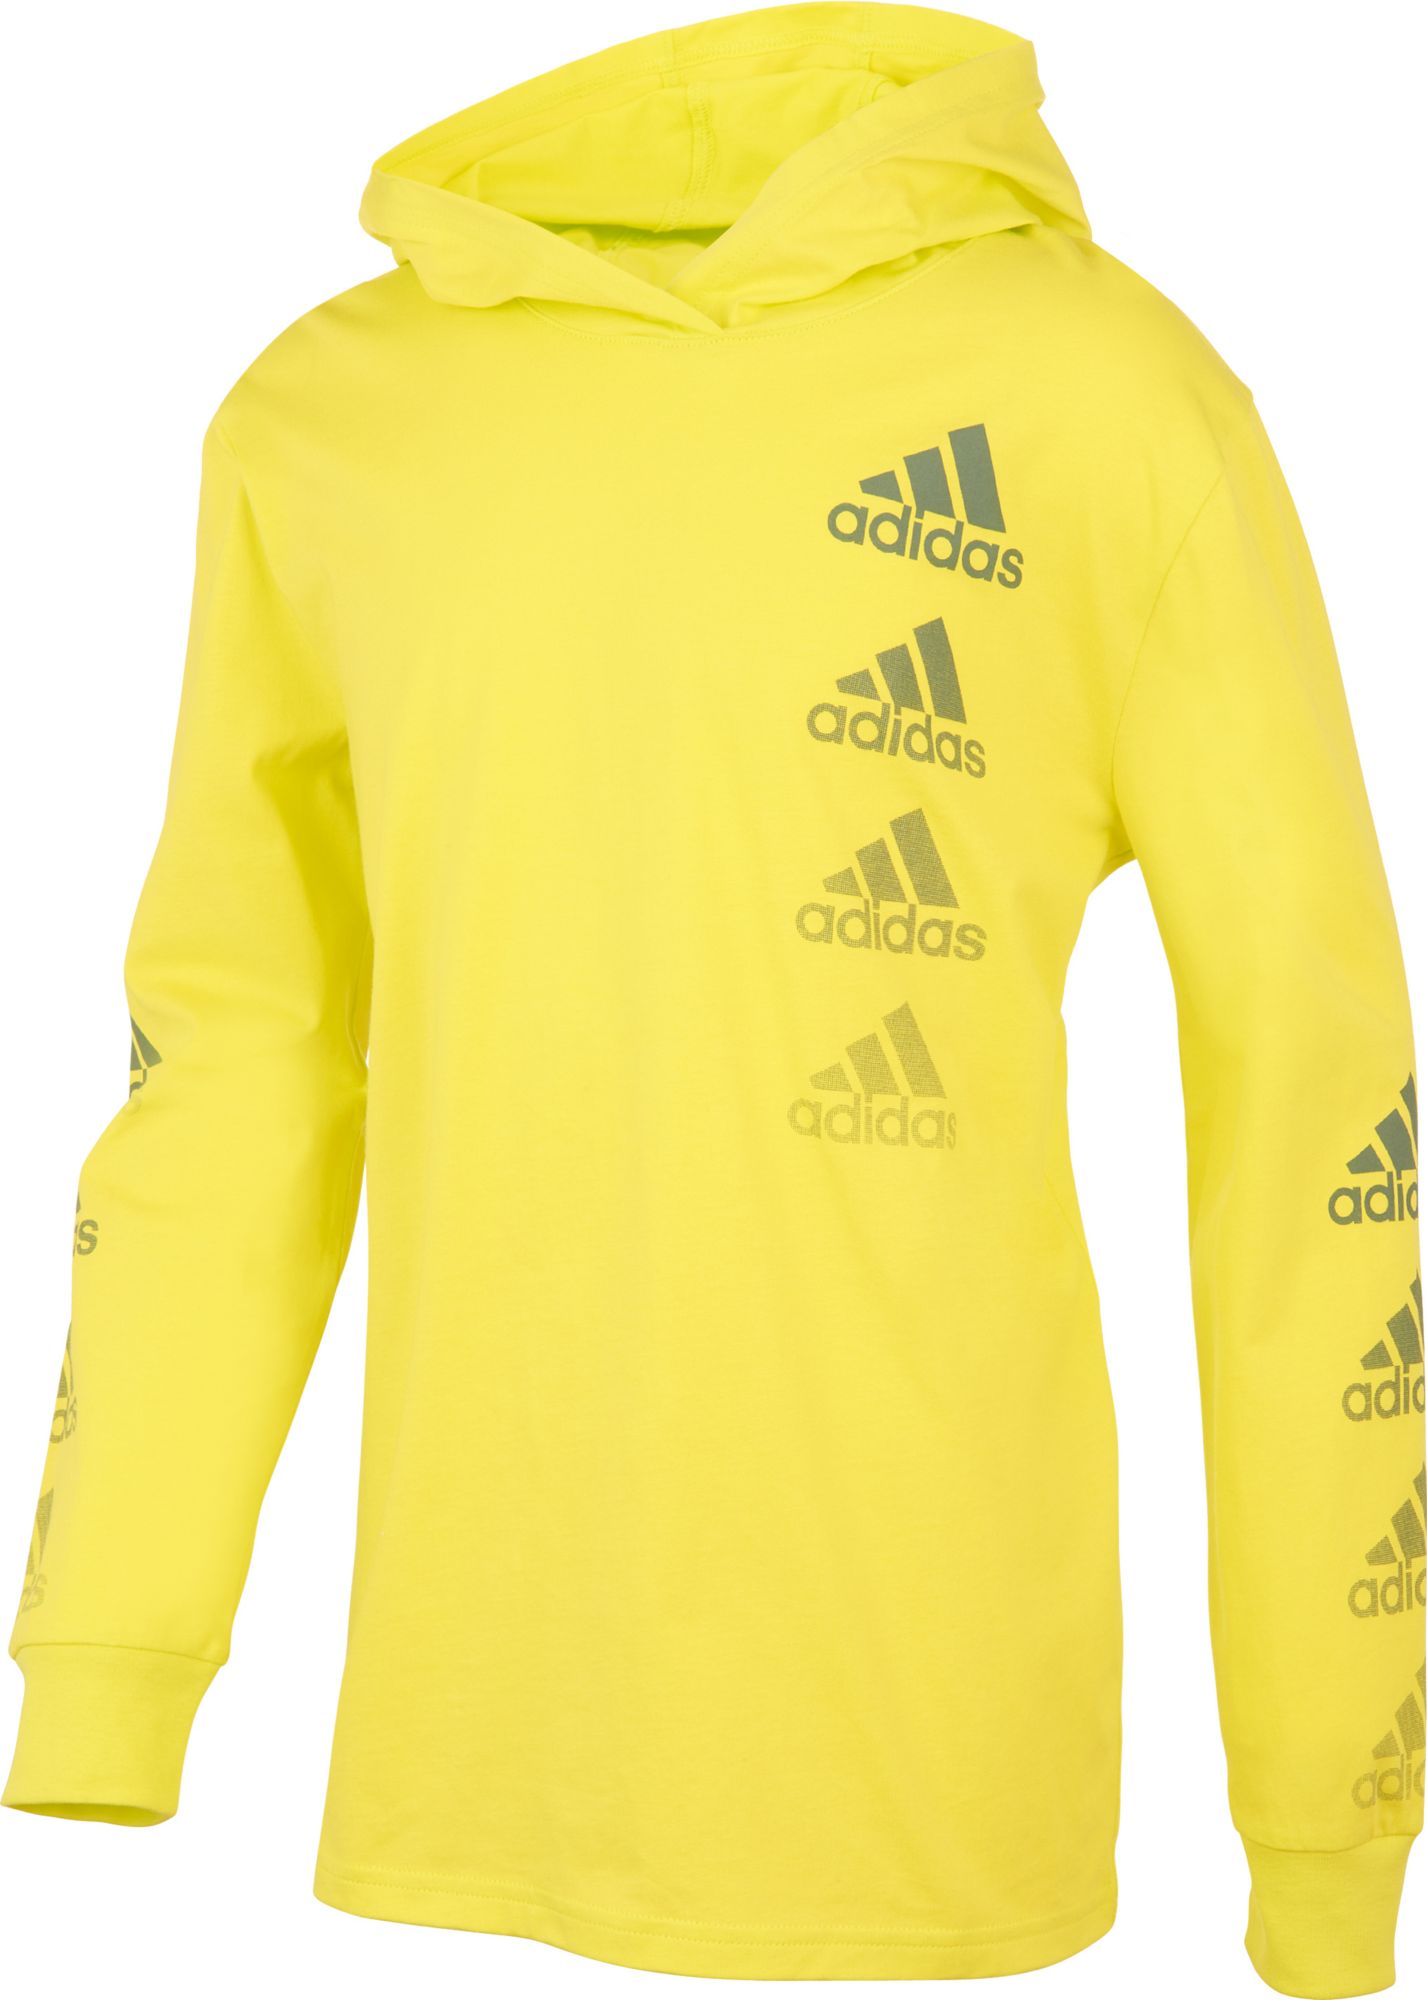 yellow adidas clothes